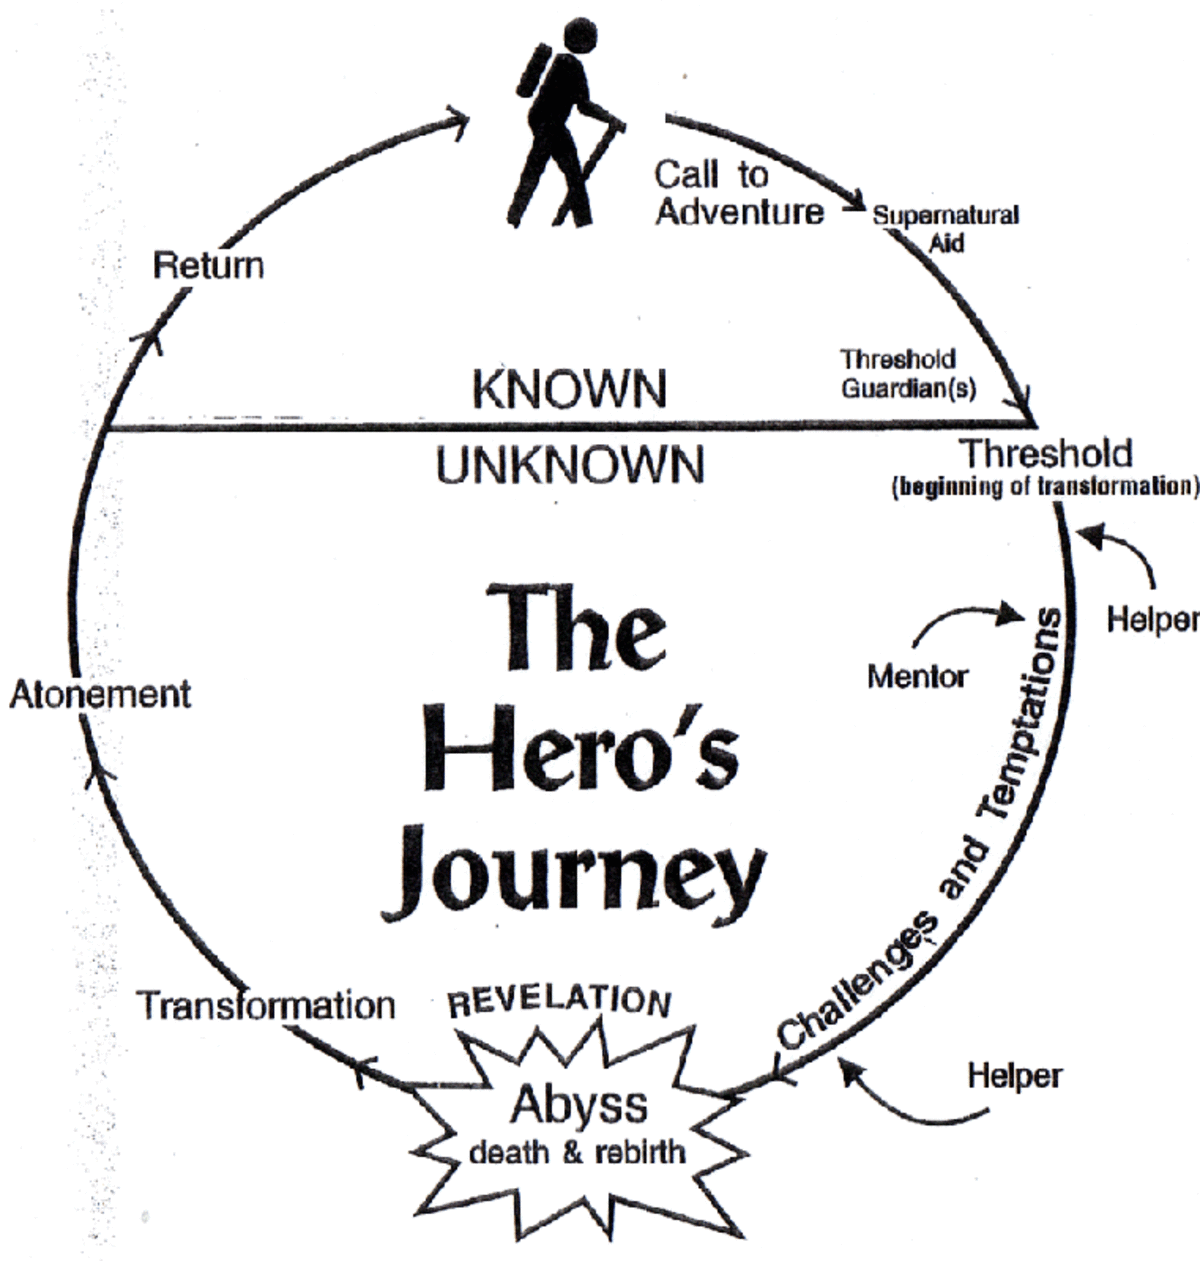 heroic journey monomyth